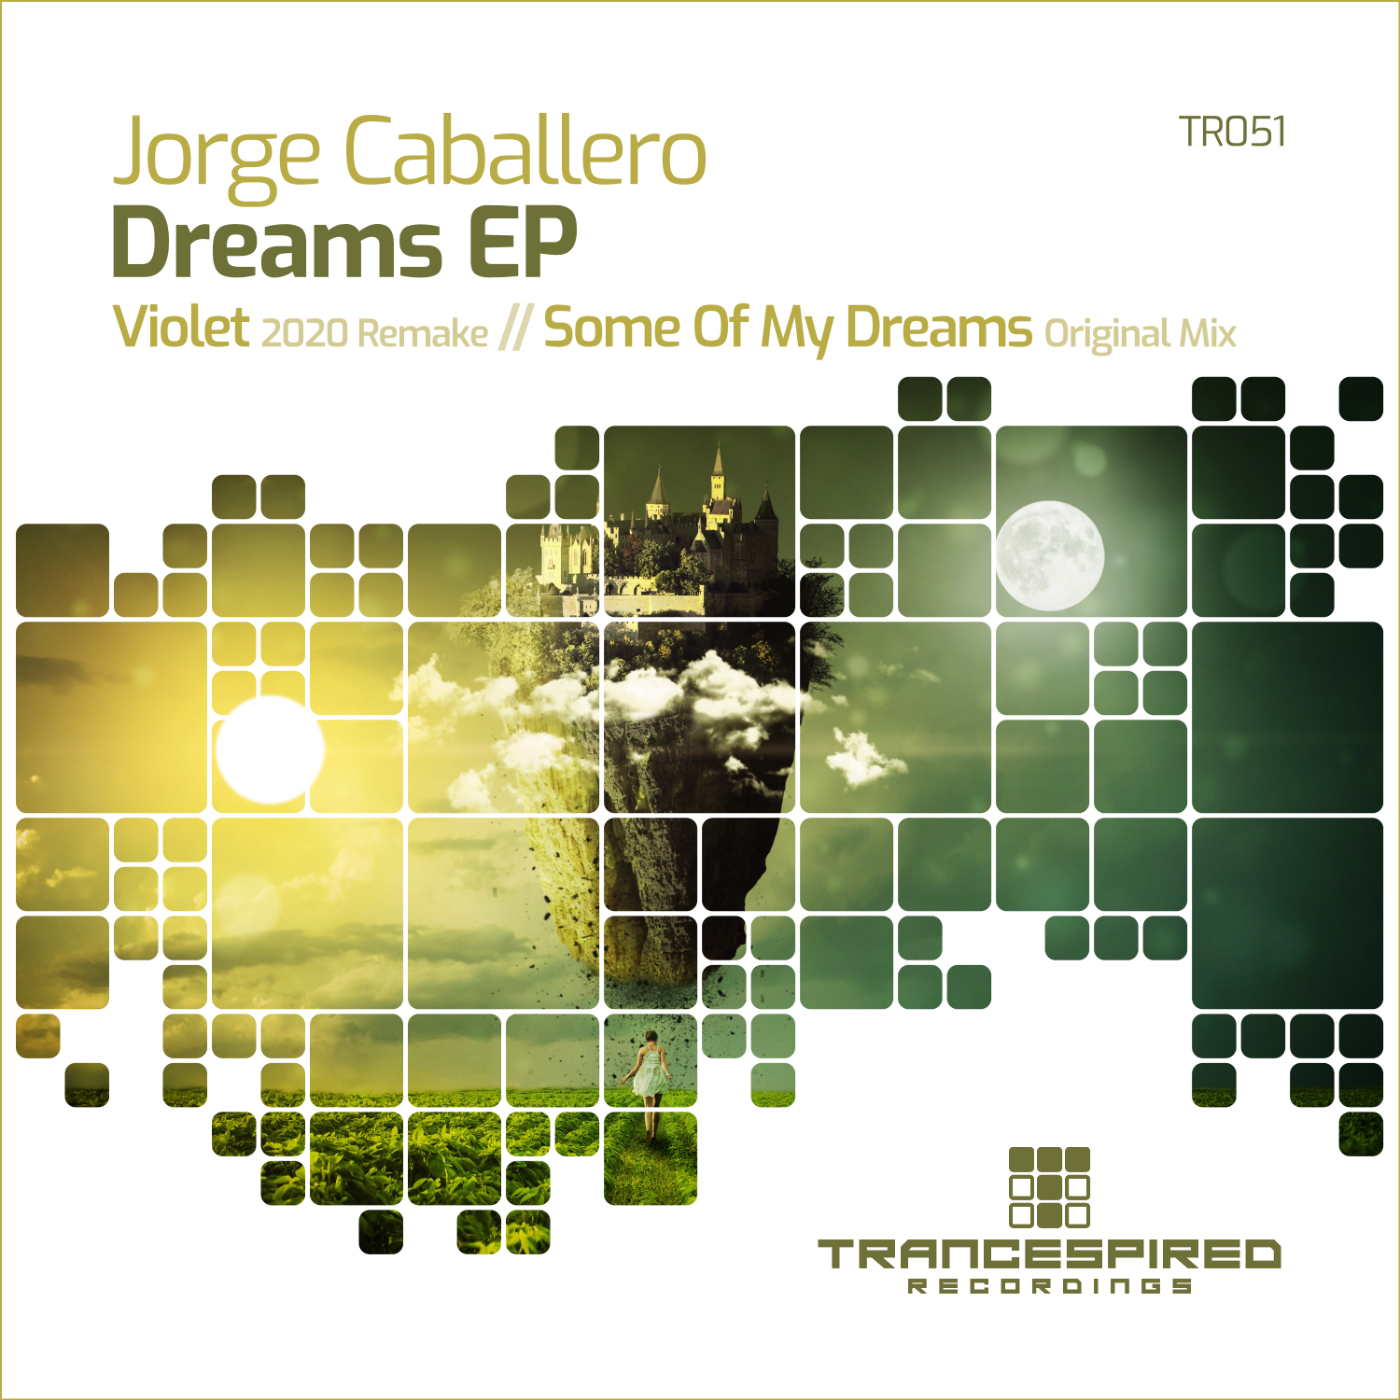 Jorge Caballero presents Dreams EP on Trancespired Recordings